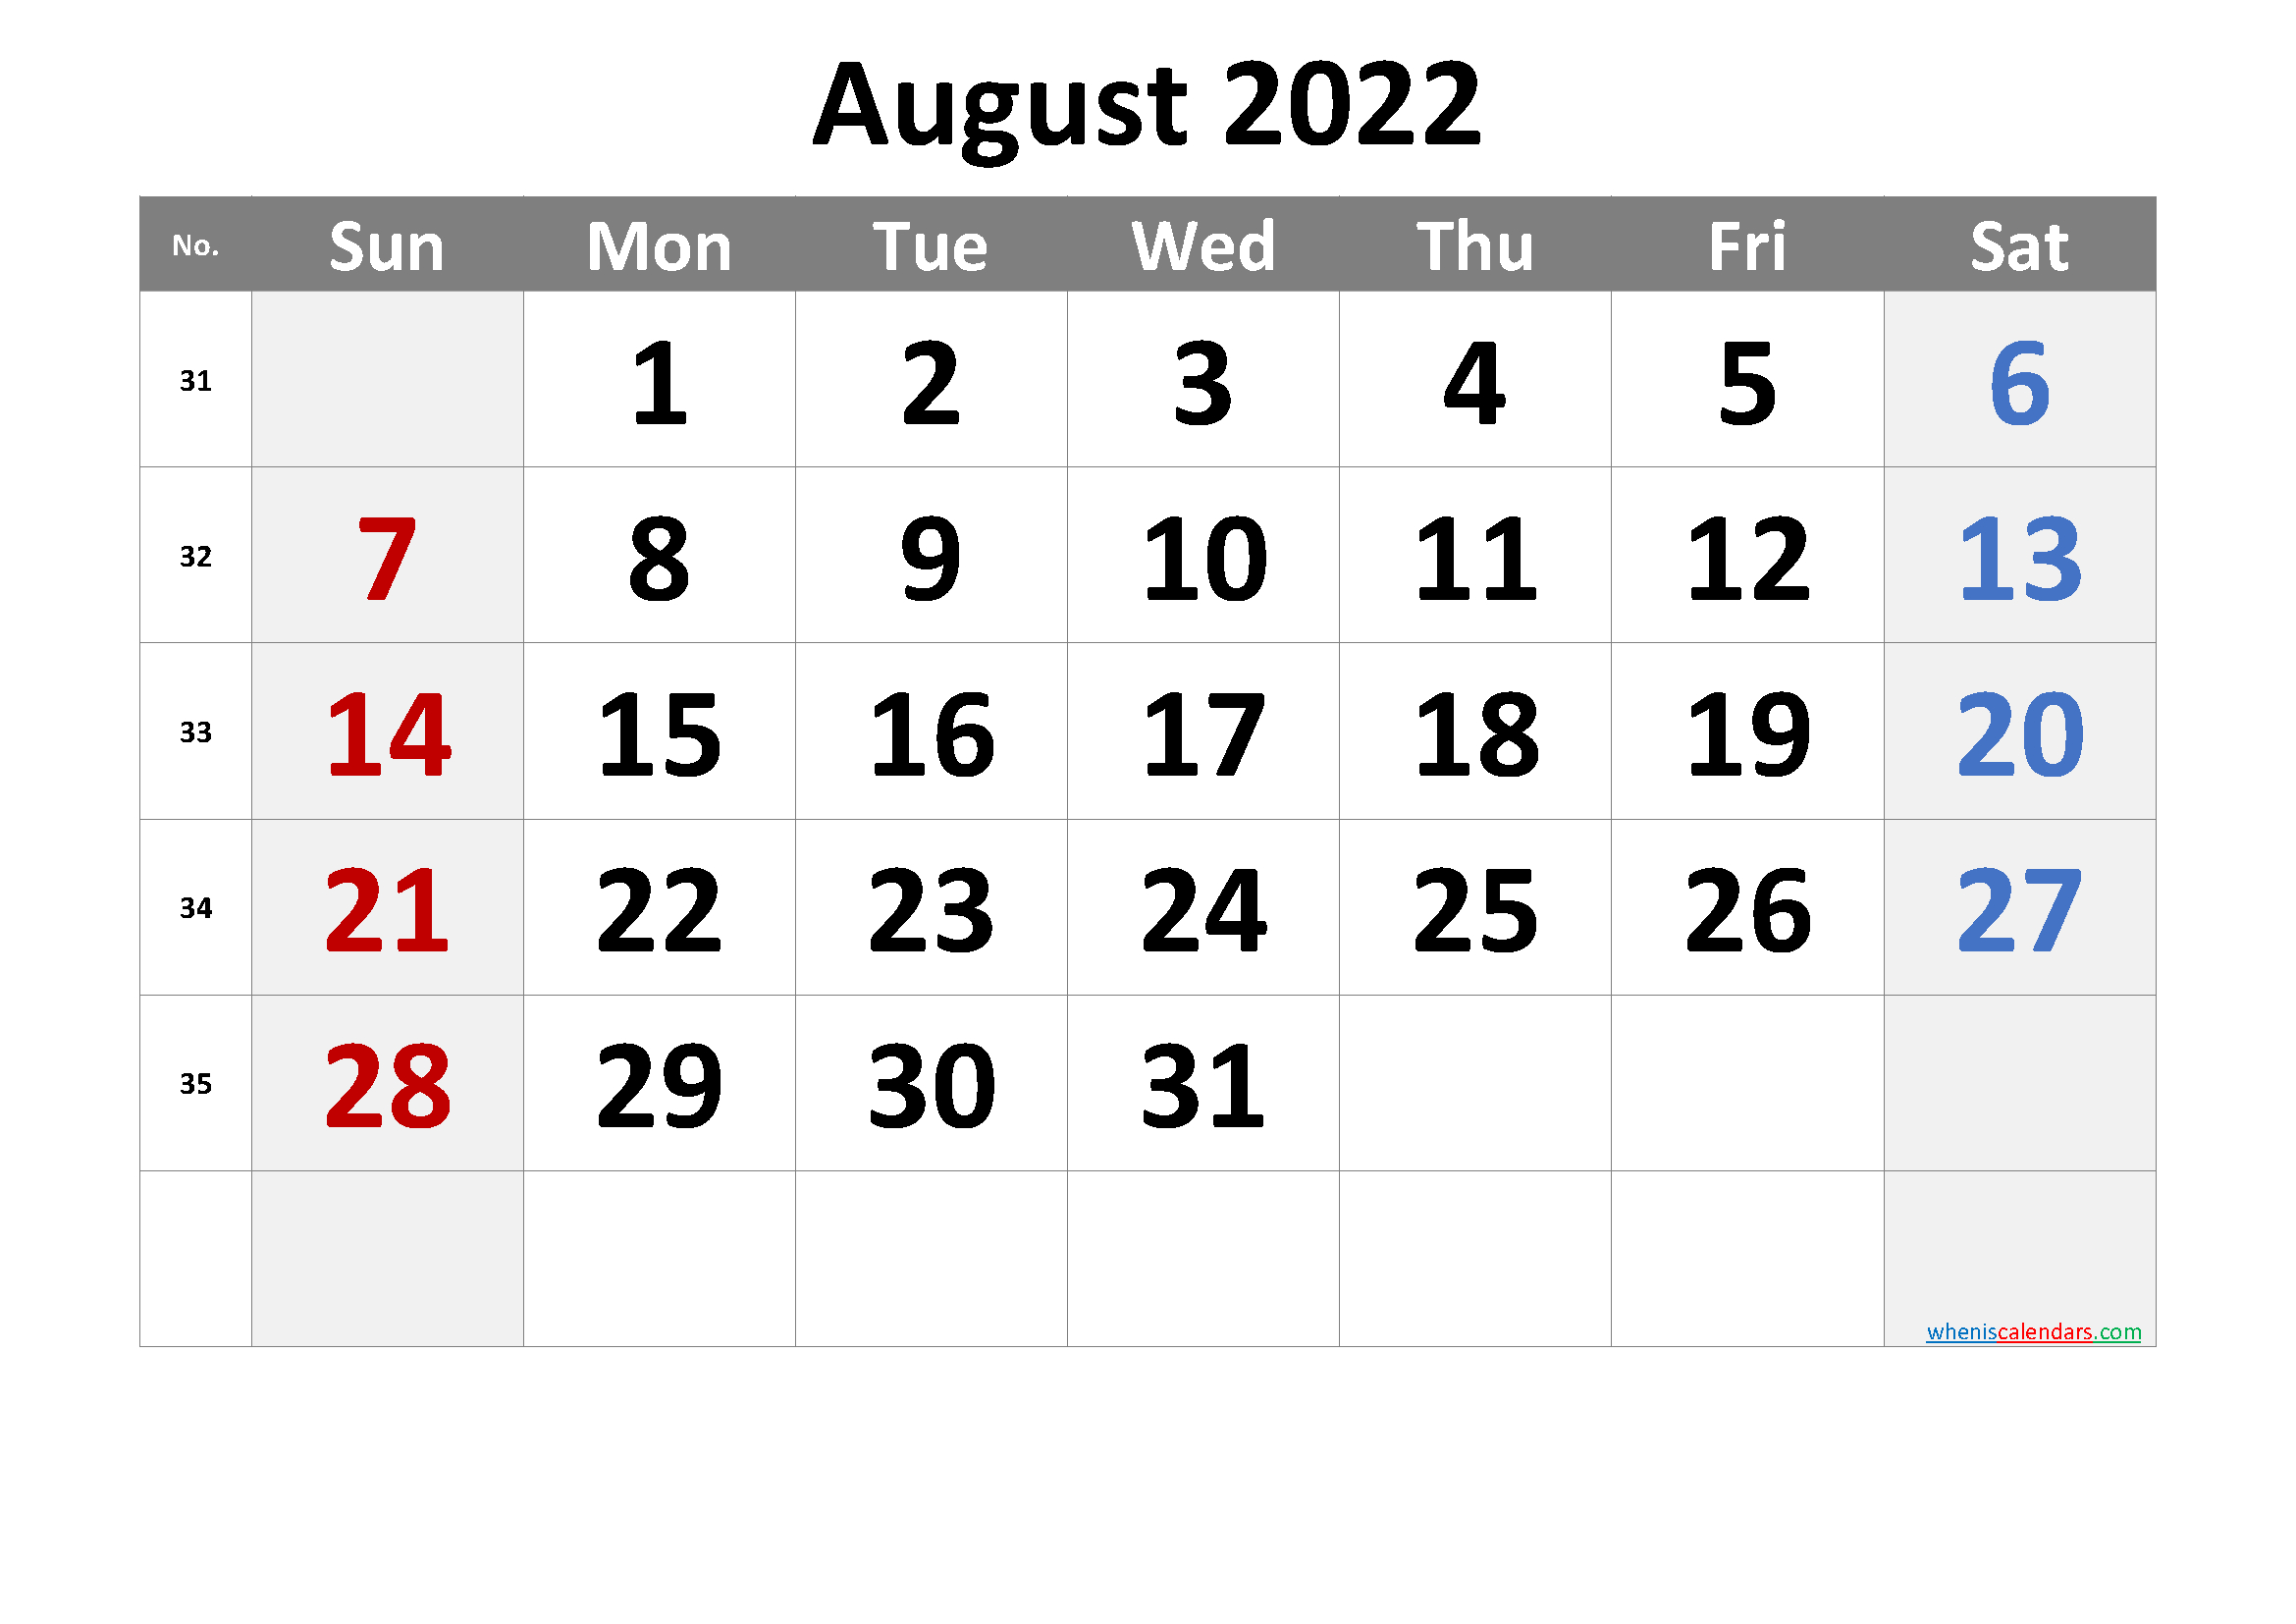 August 2022 Printable Calendar With Holidays  6 Templates intended for August 2022 Printable Calendar